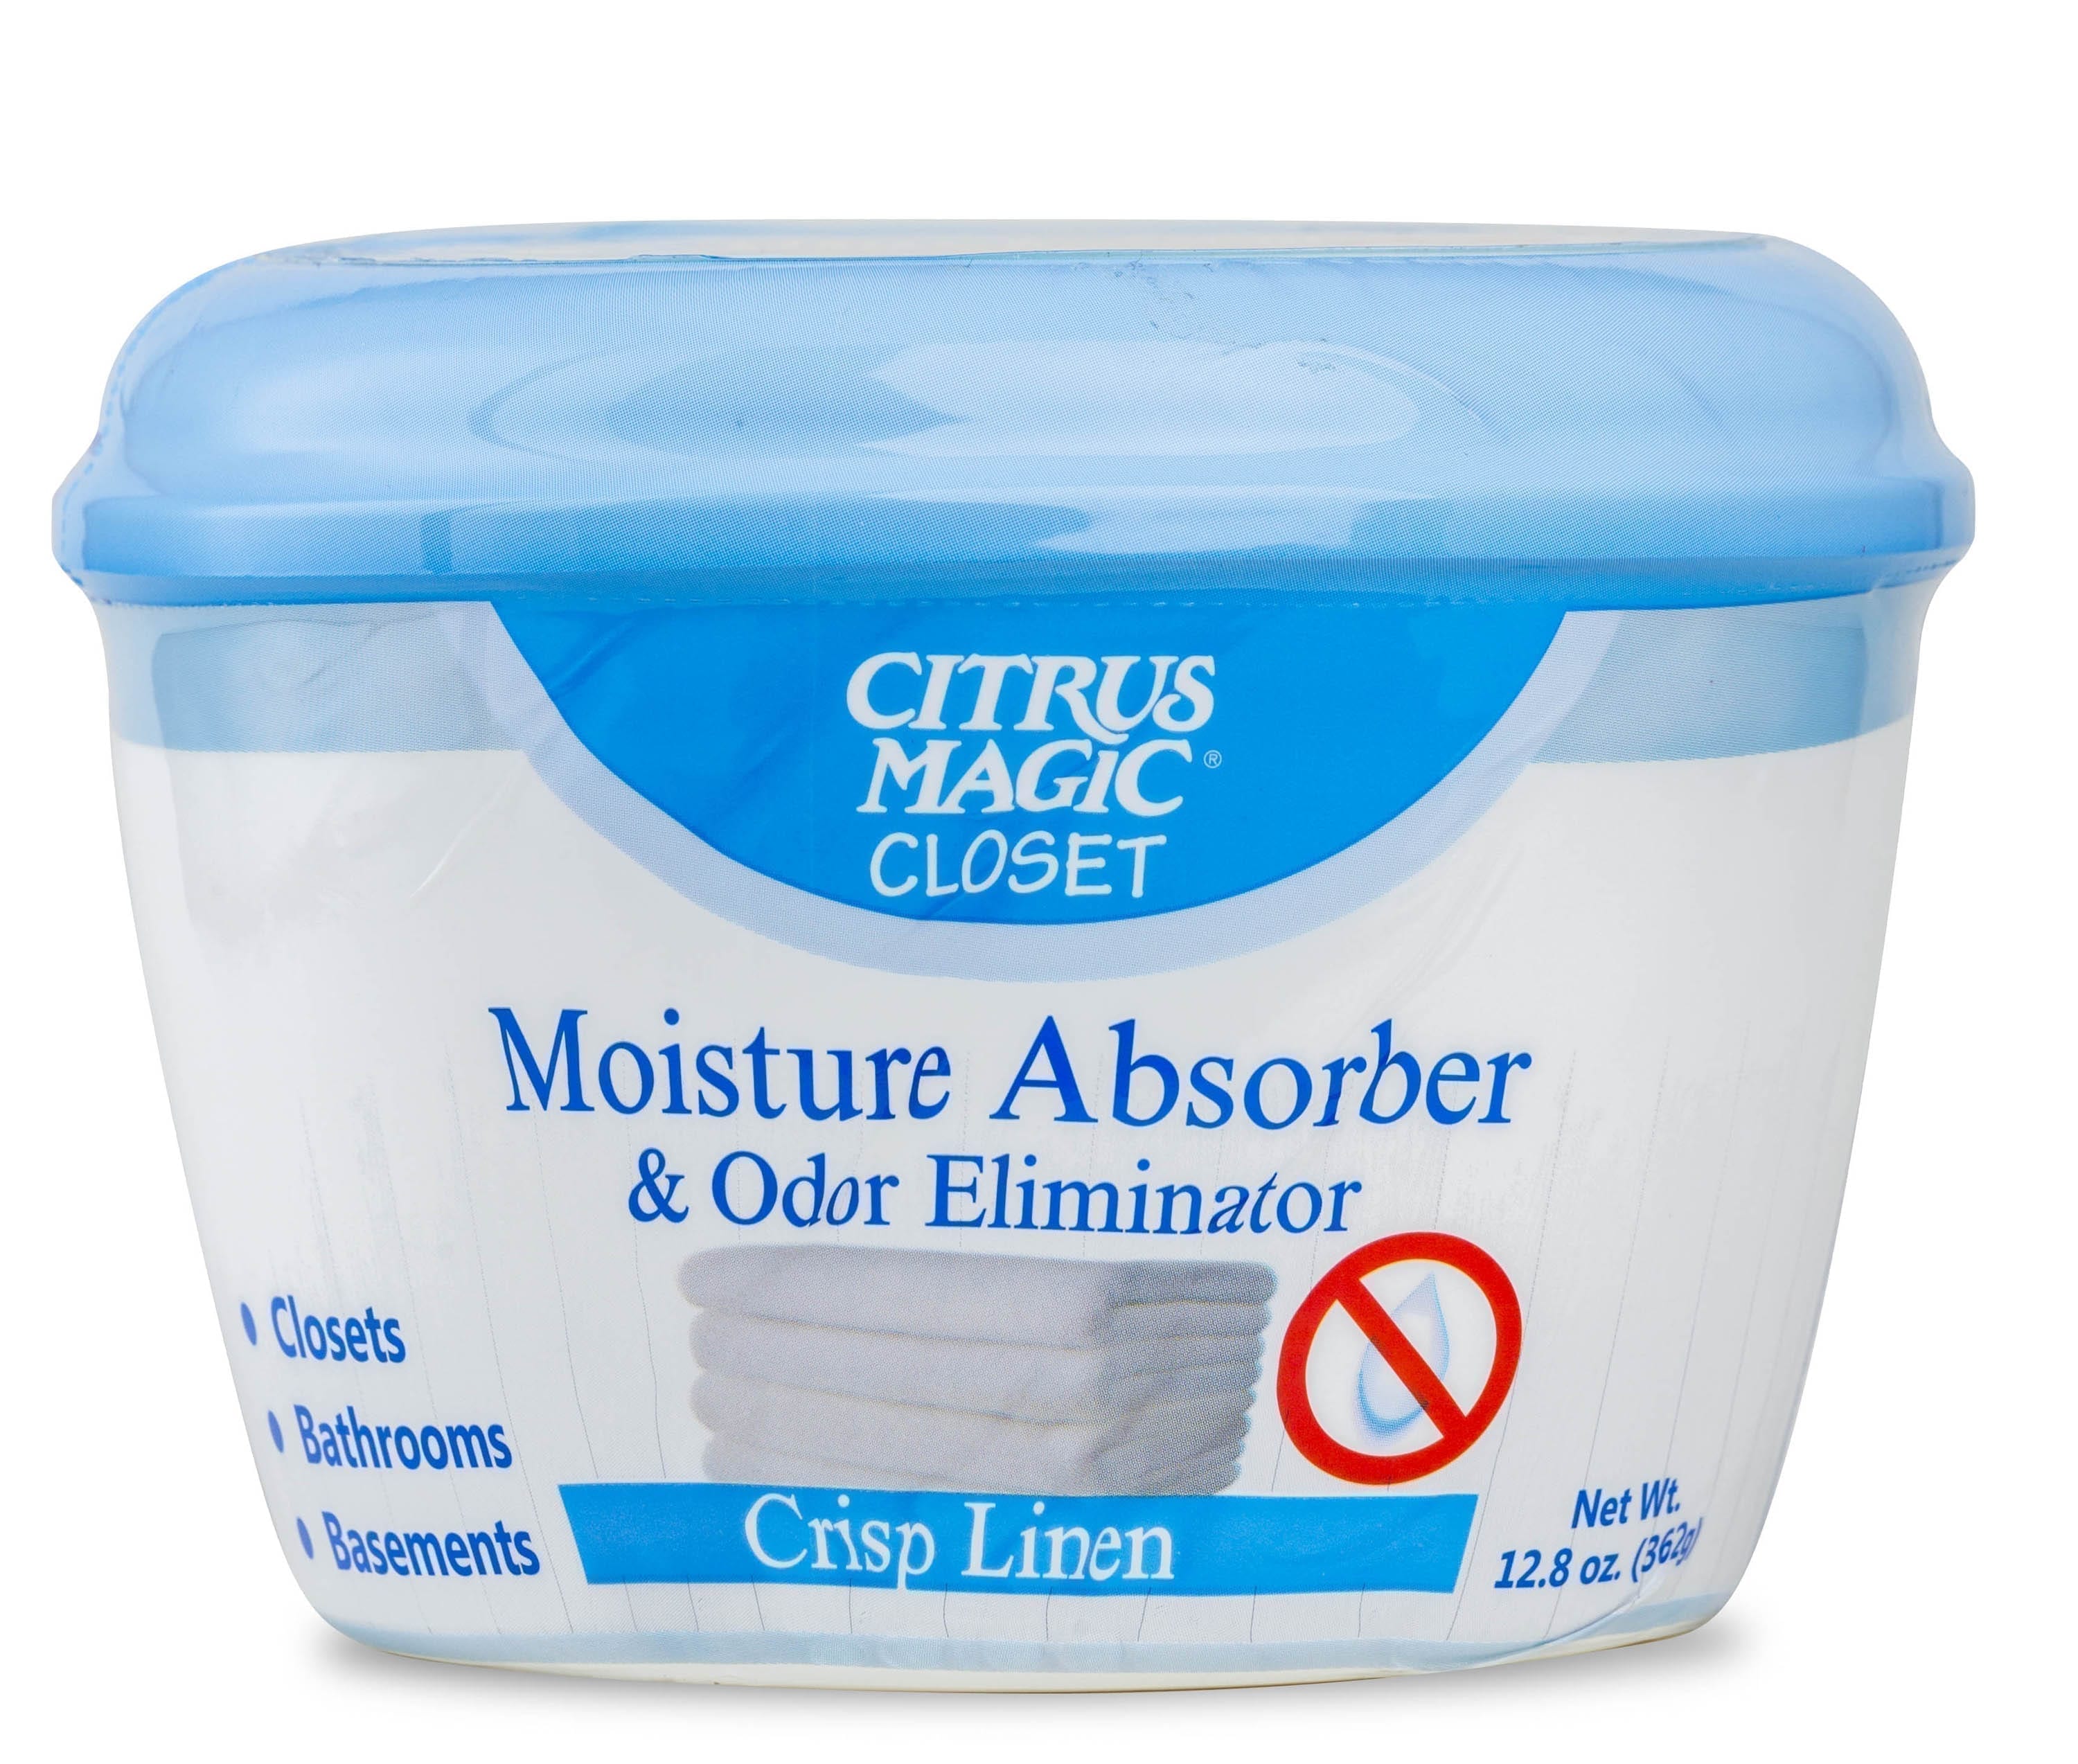 Citrus Magic For Closets Moisture Absorber and Odor Eliminator, Crisp Linen